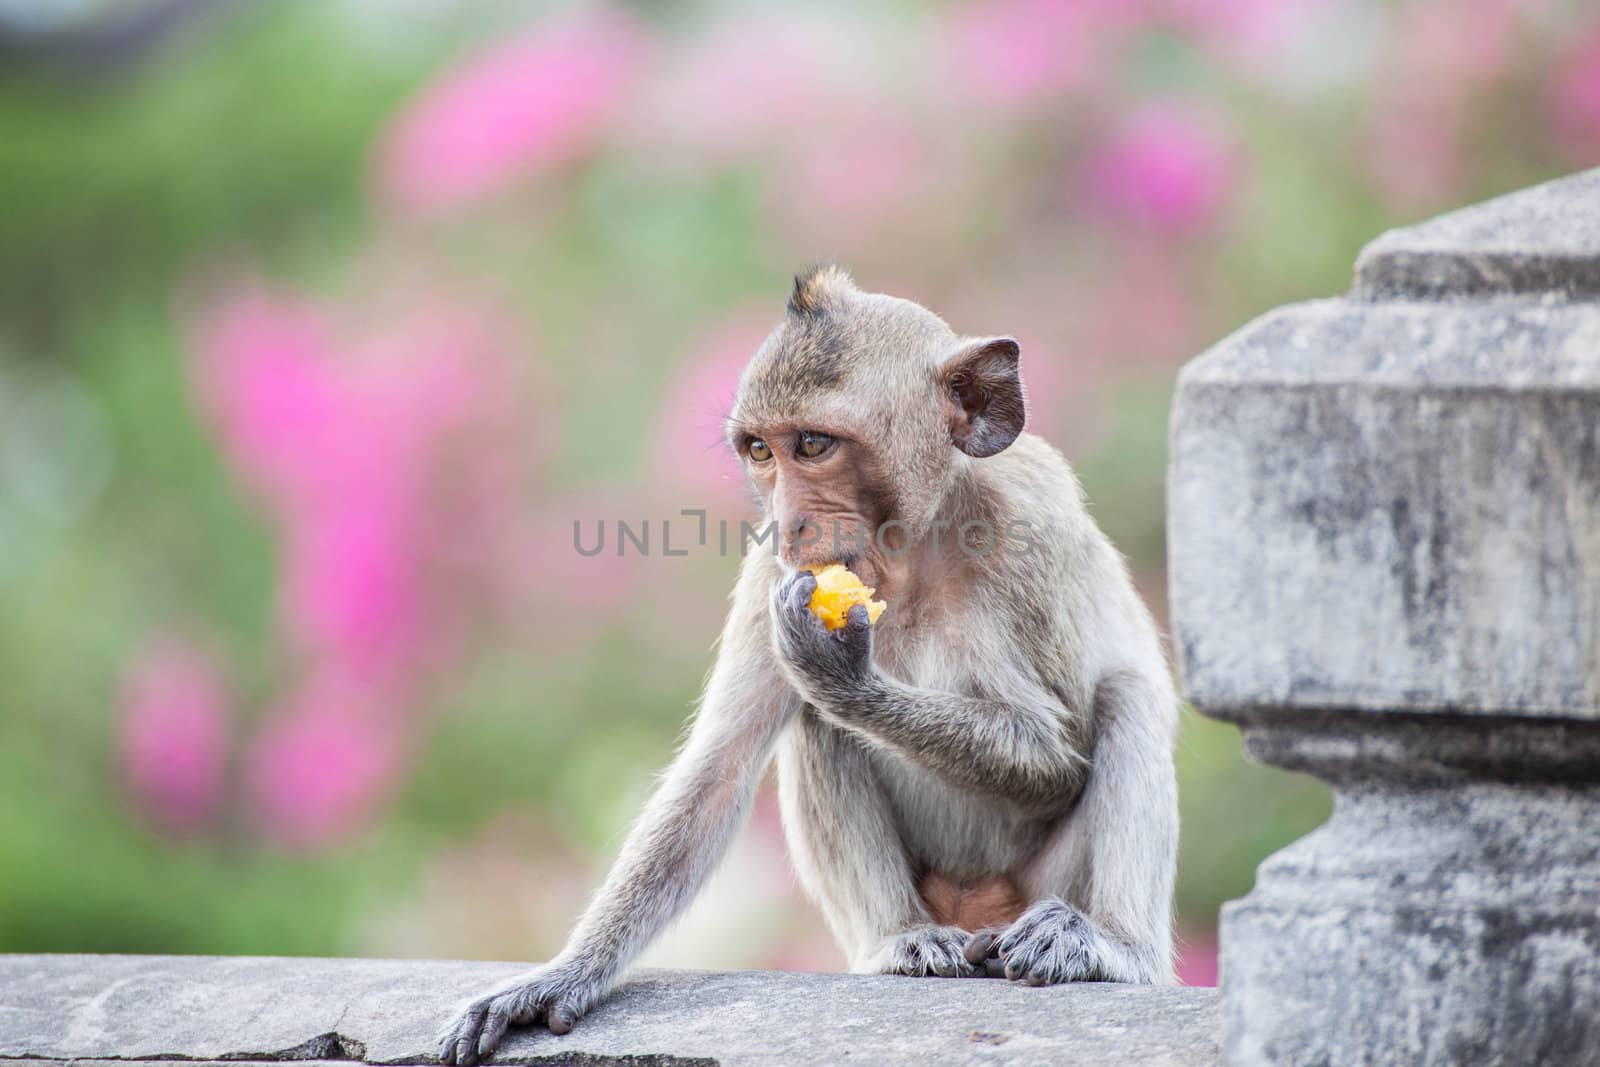 Monkey by thanatip